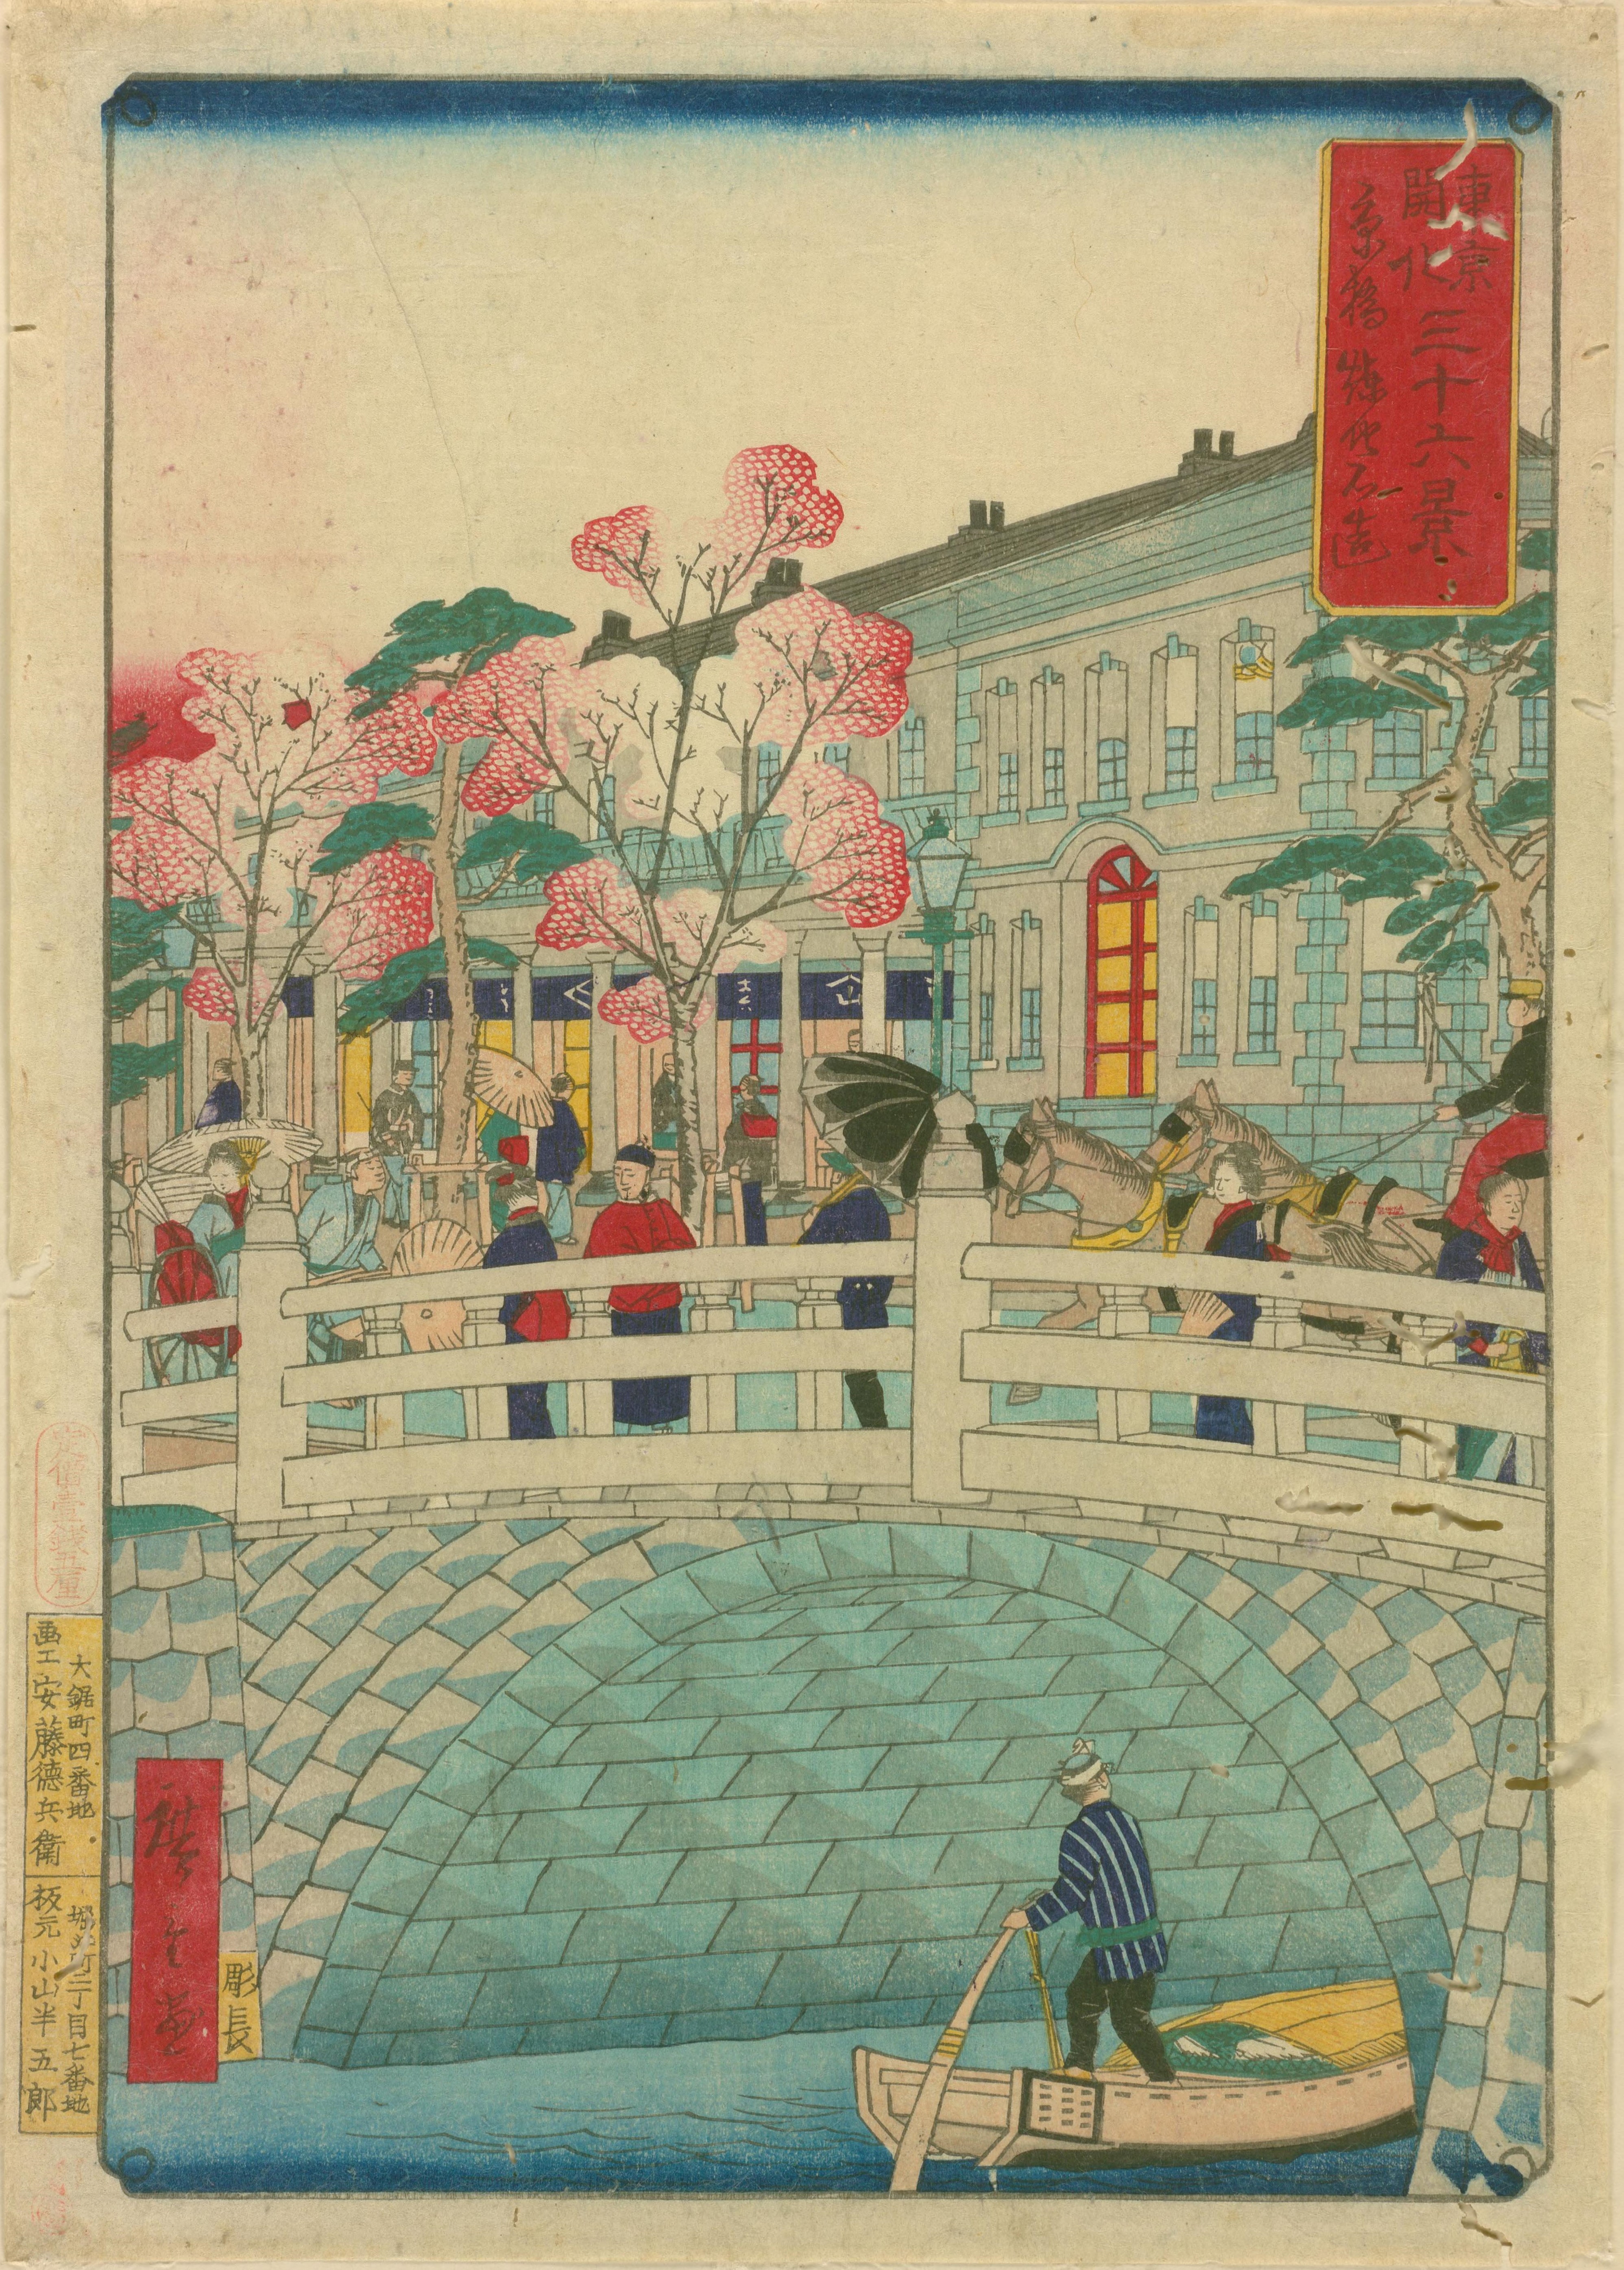 File:NDL-DC 2542937 18-Utagawa Hiroshige III-東京開化三十六景 八 